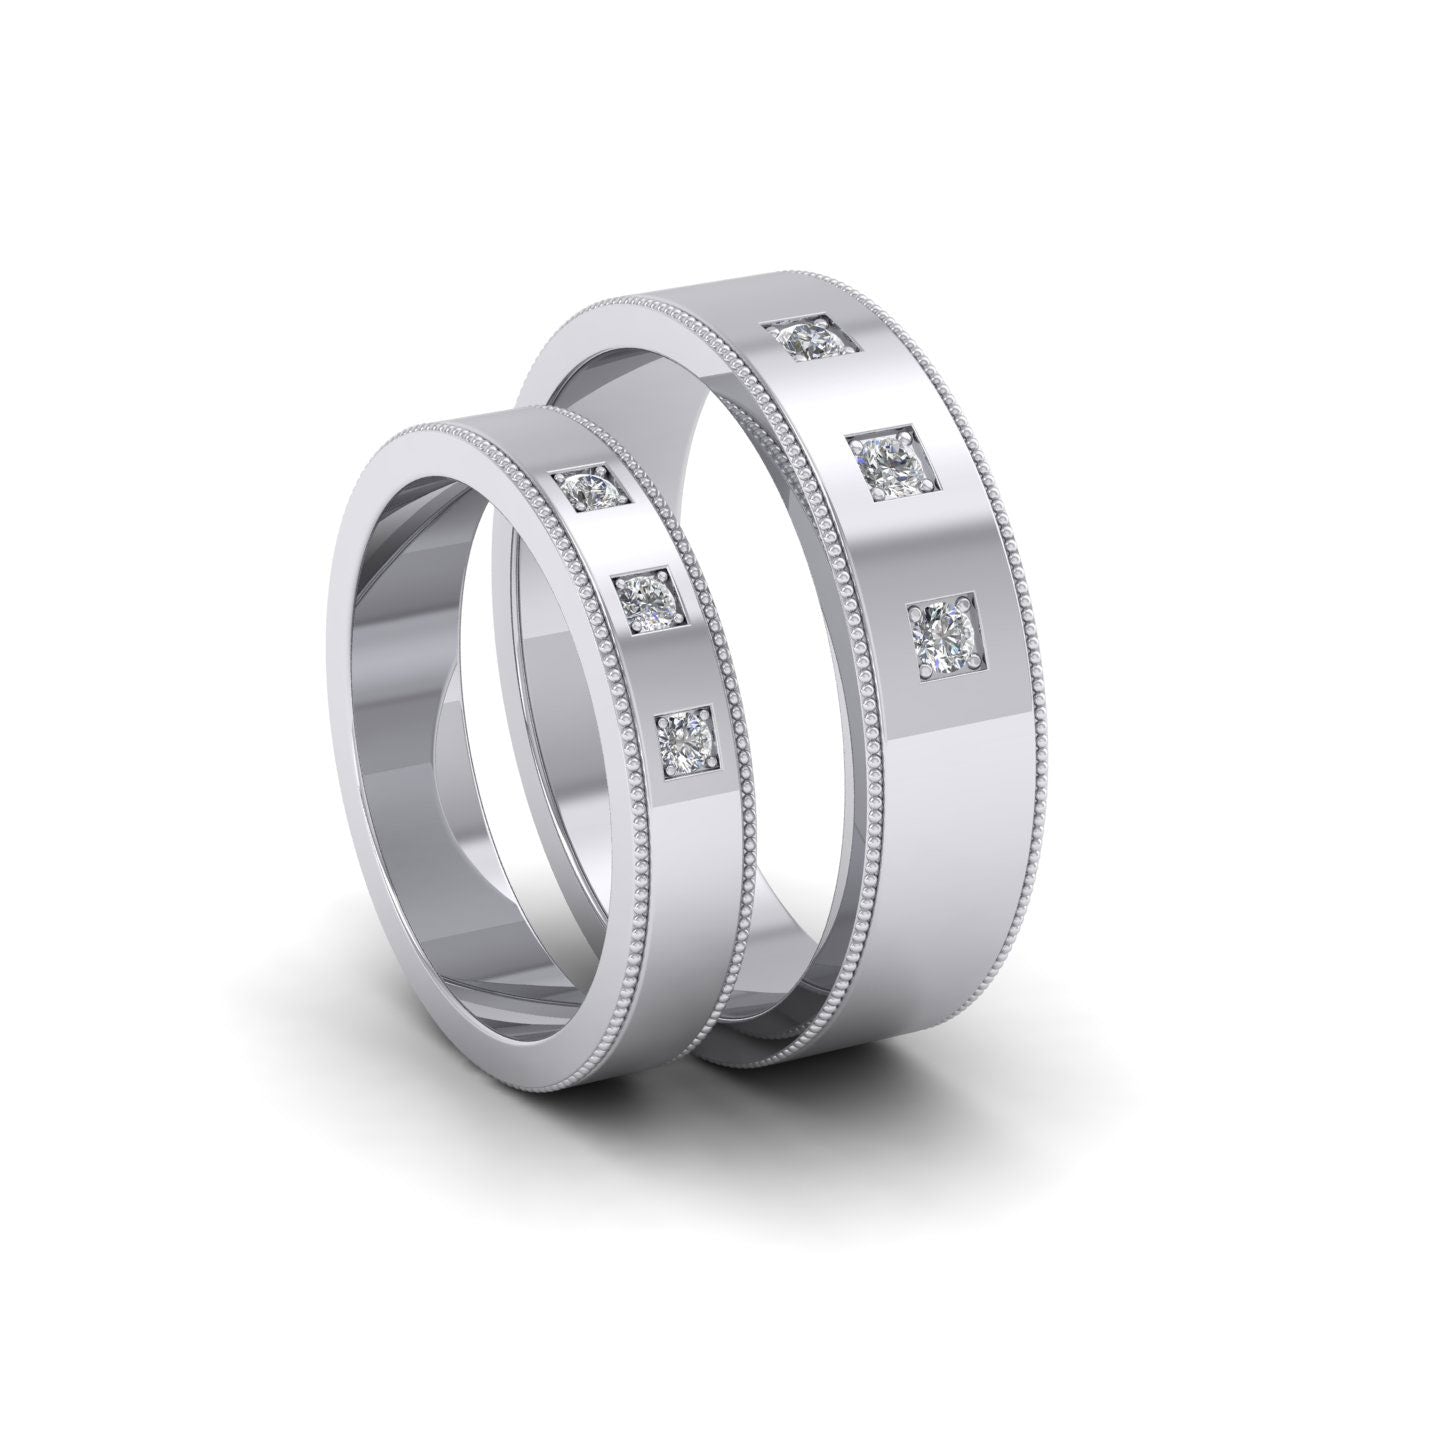 Three Diamonds With Square Setting 950 Platinum 4mm Wedding Ring With Millgrain Edge